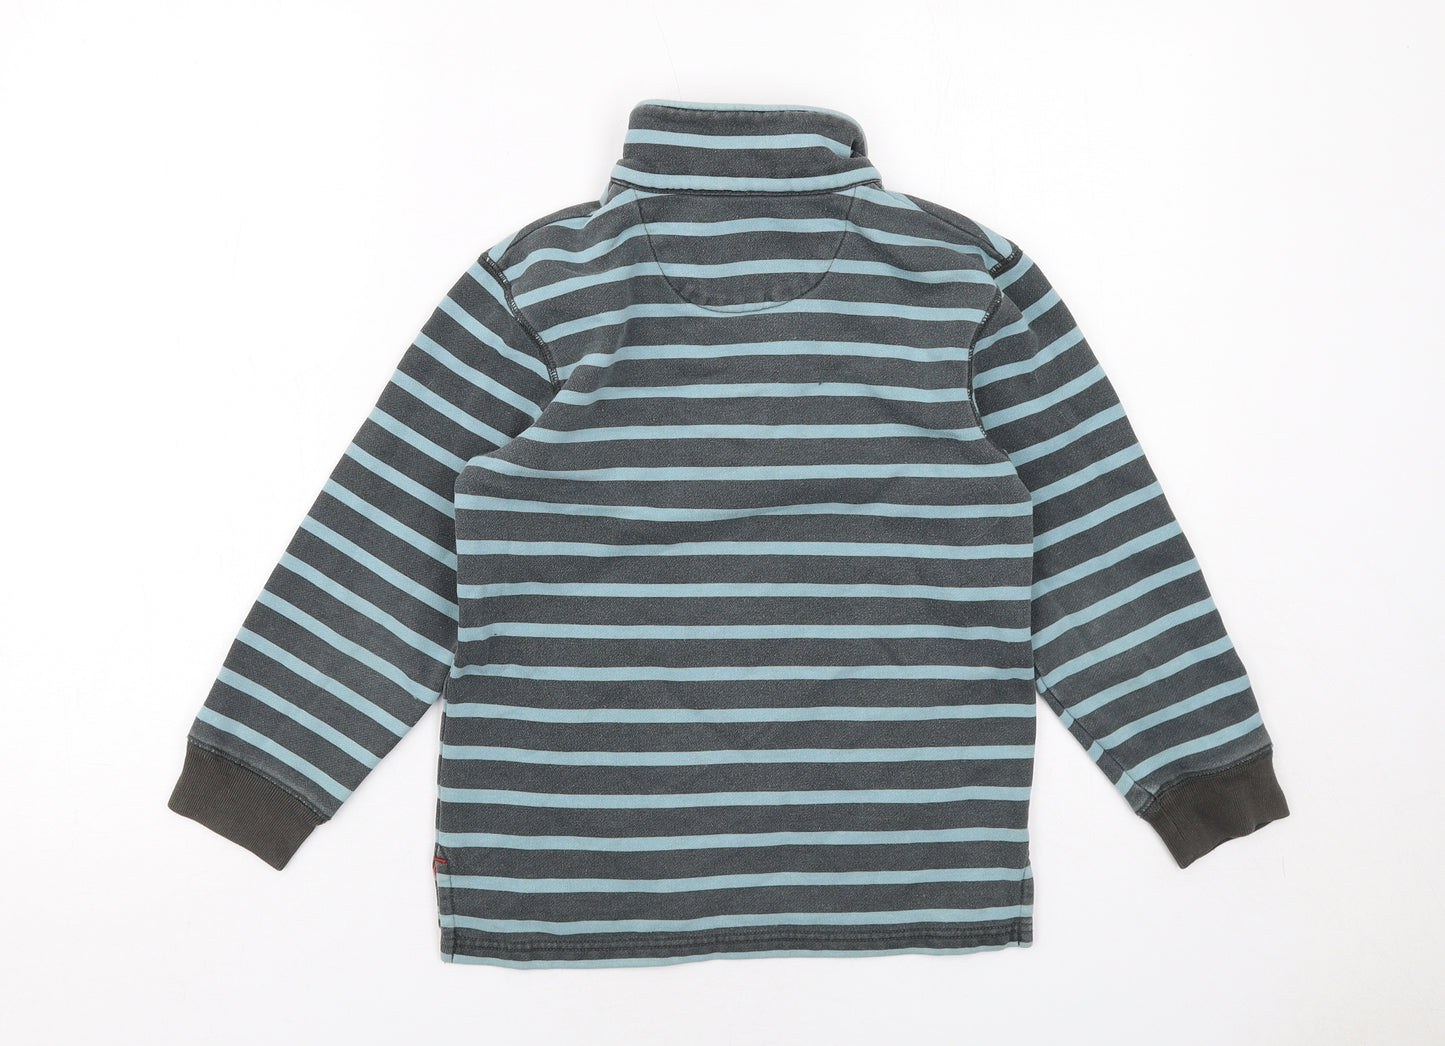 Boden Boys Blue Striped Cotton Pullover Sweatshirt Size 7-8 Years Zip